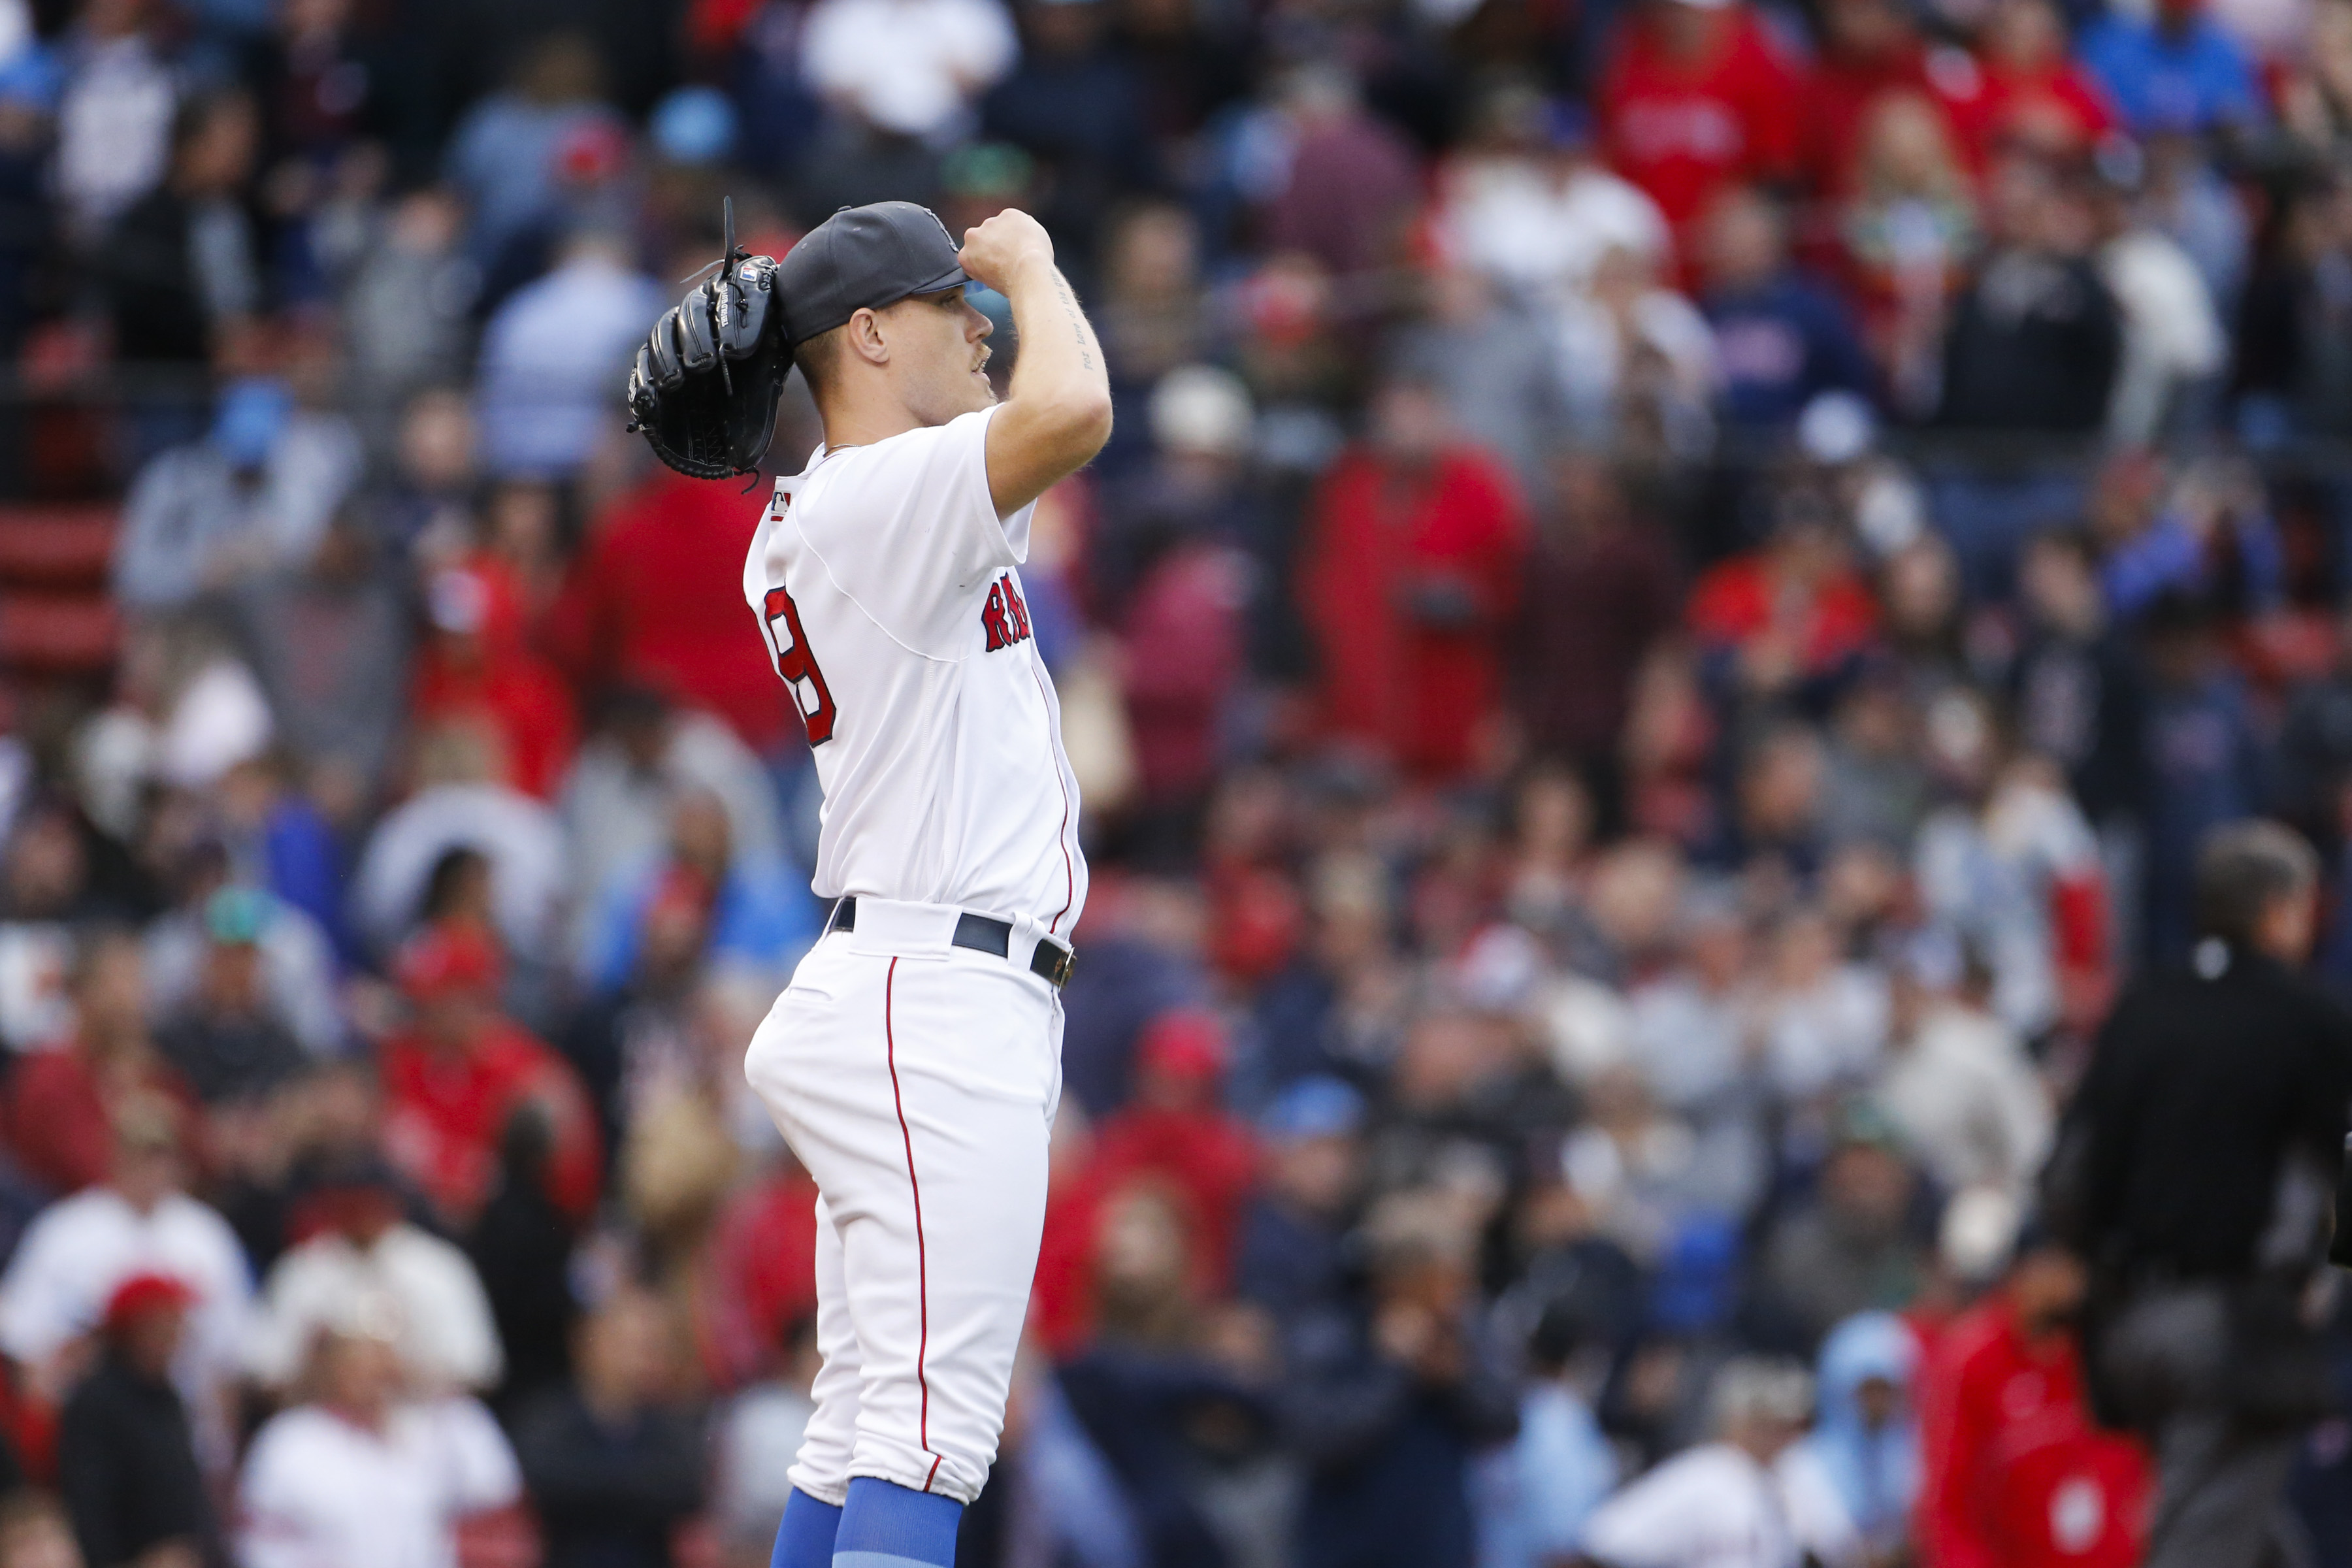 A heads-up to local students: It's baseball season - The Boston Globe